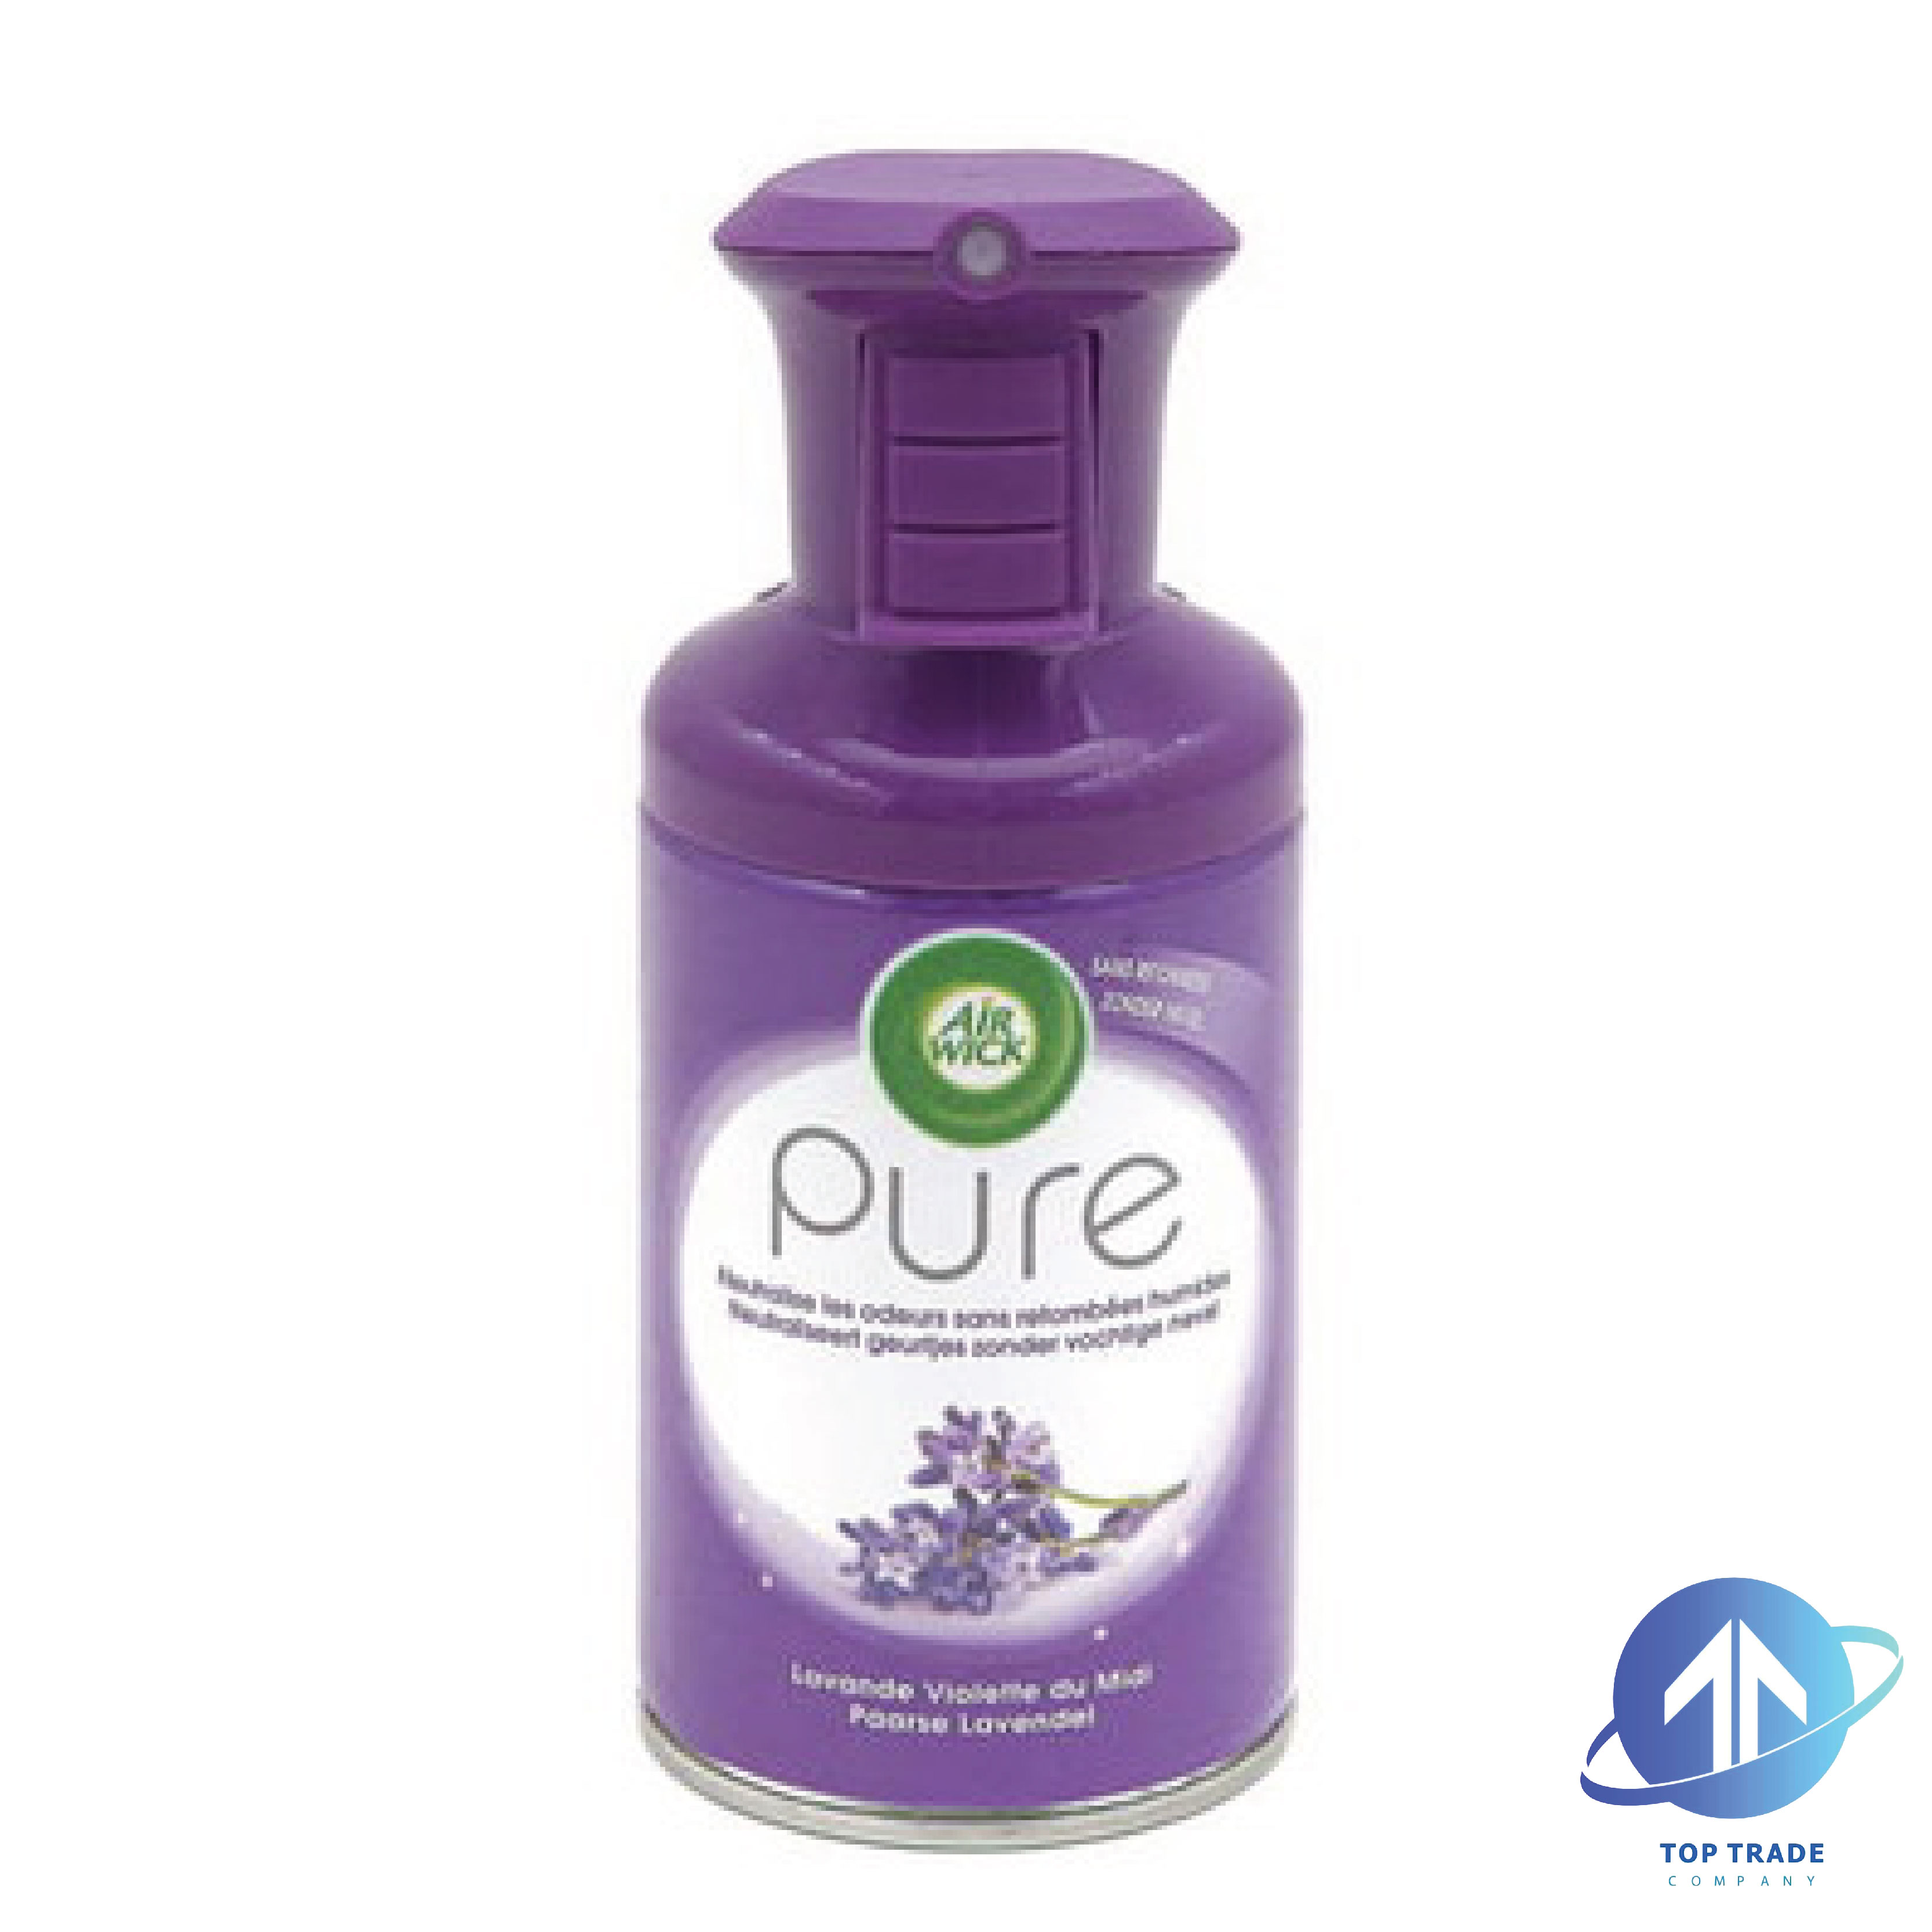 Airwick Pure air freshener spray Lavender 250ml